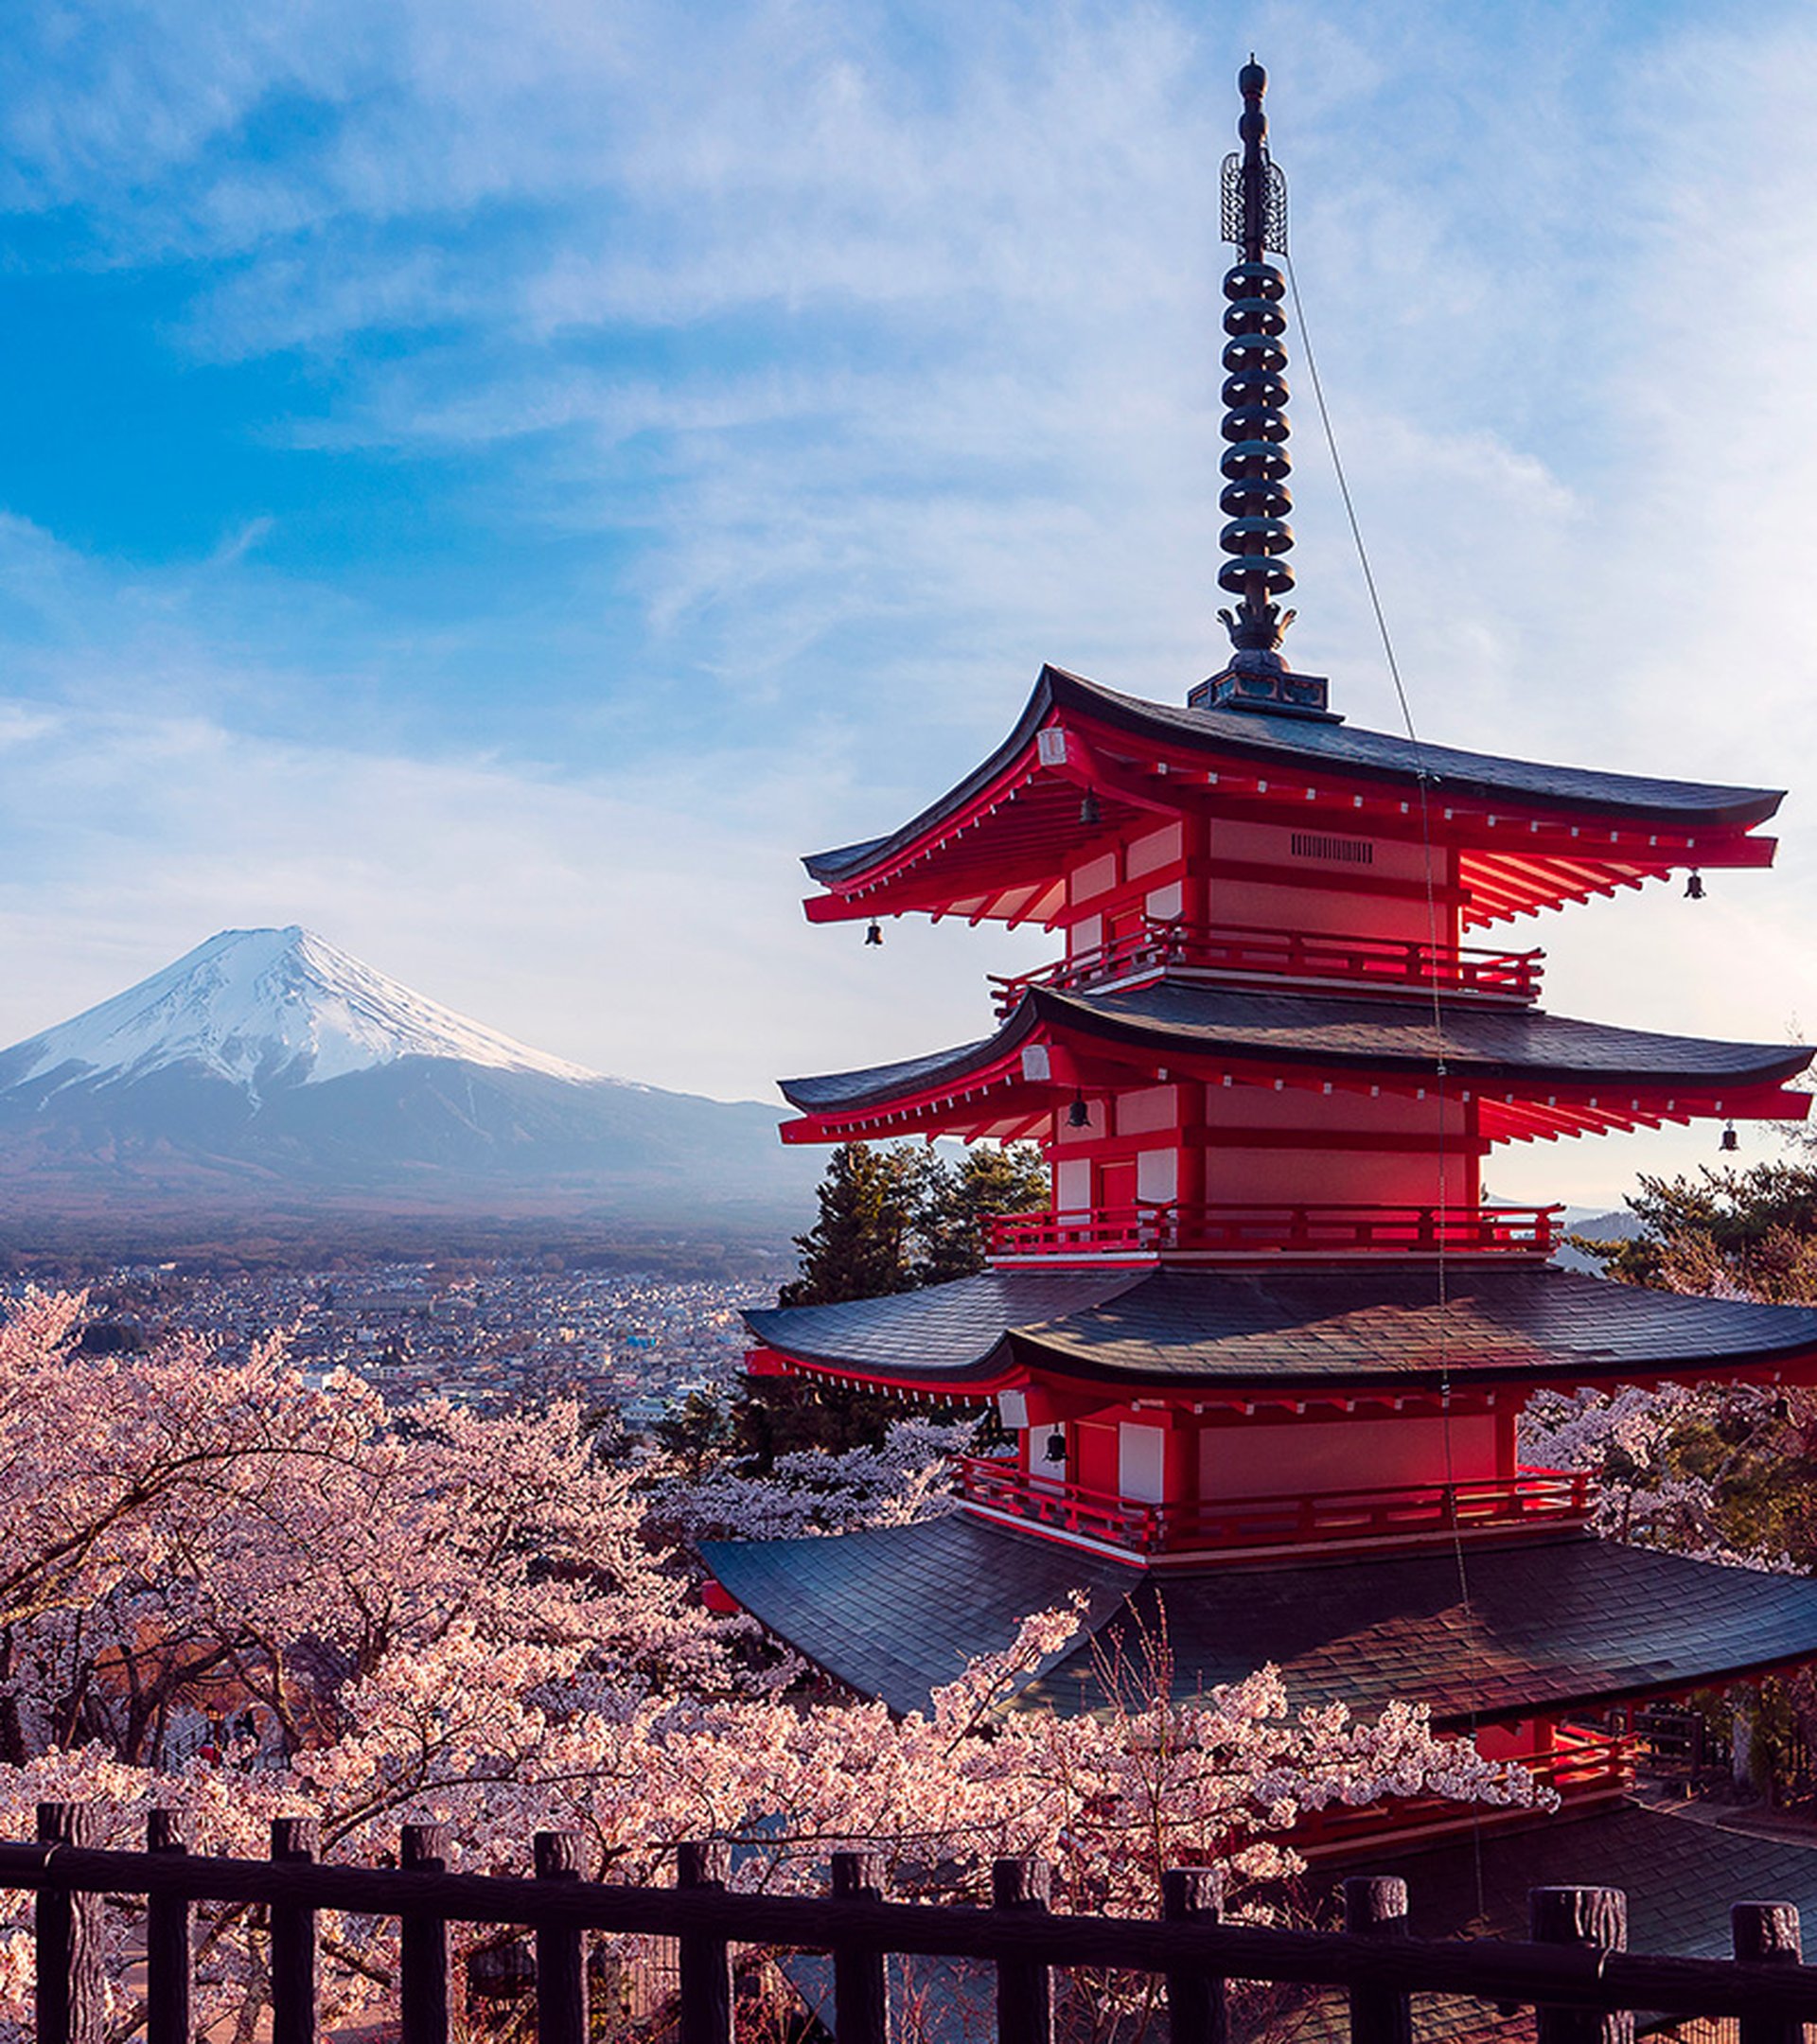 Cartes Japon : Kanto, Kansai, hokkaido  préparez votre voyage - France  Japon